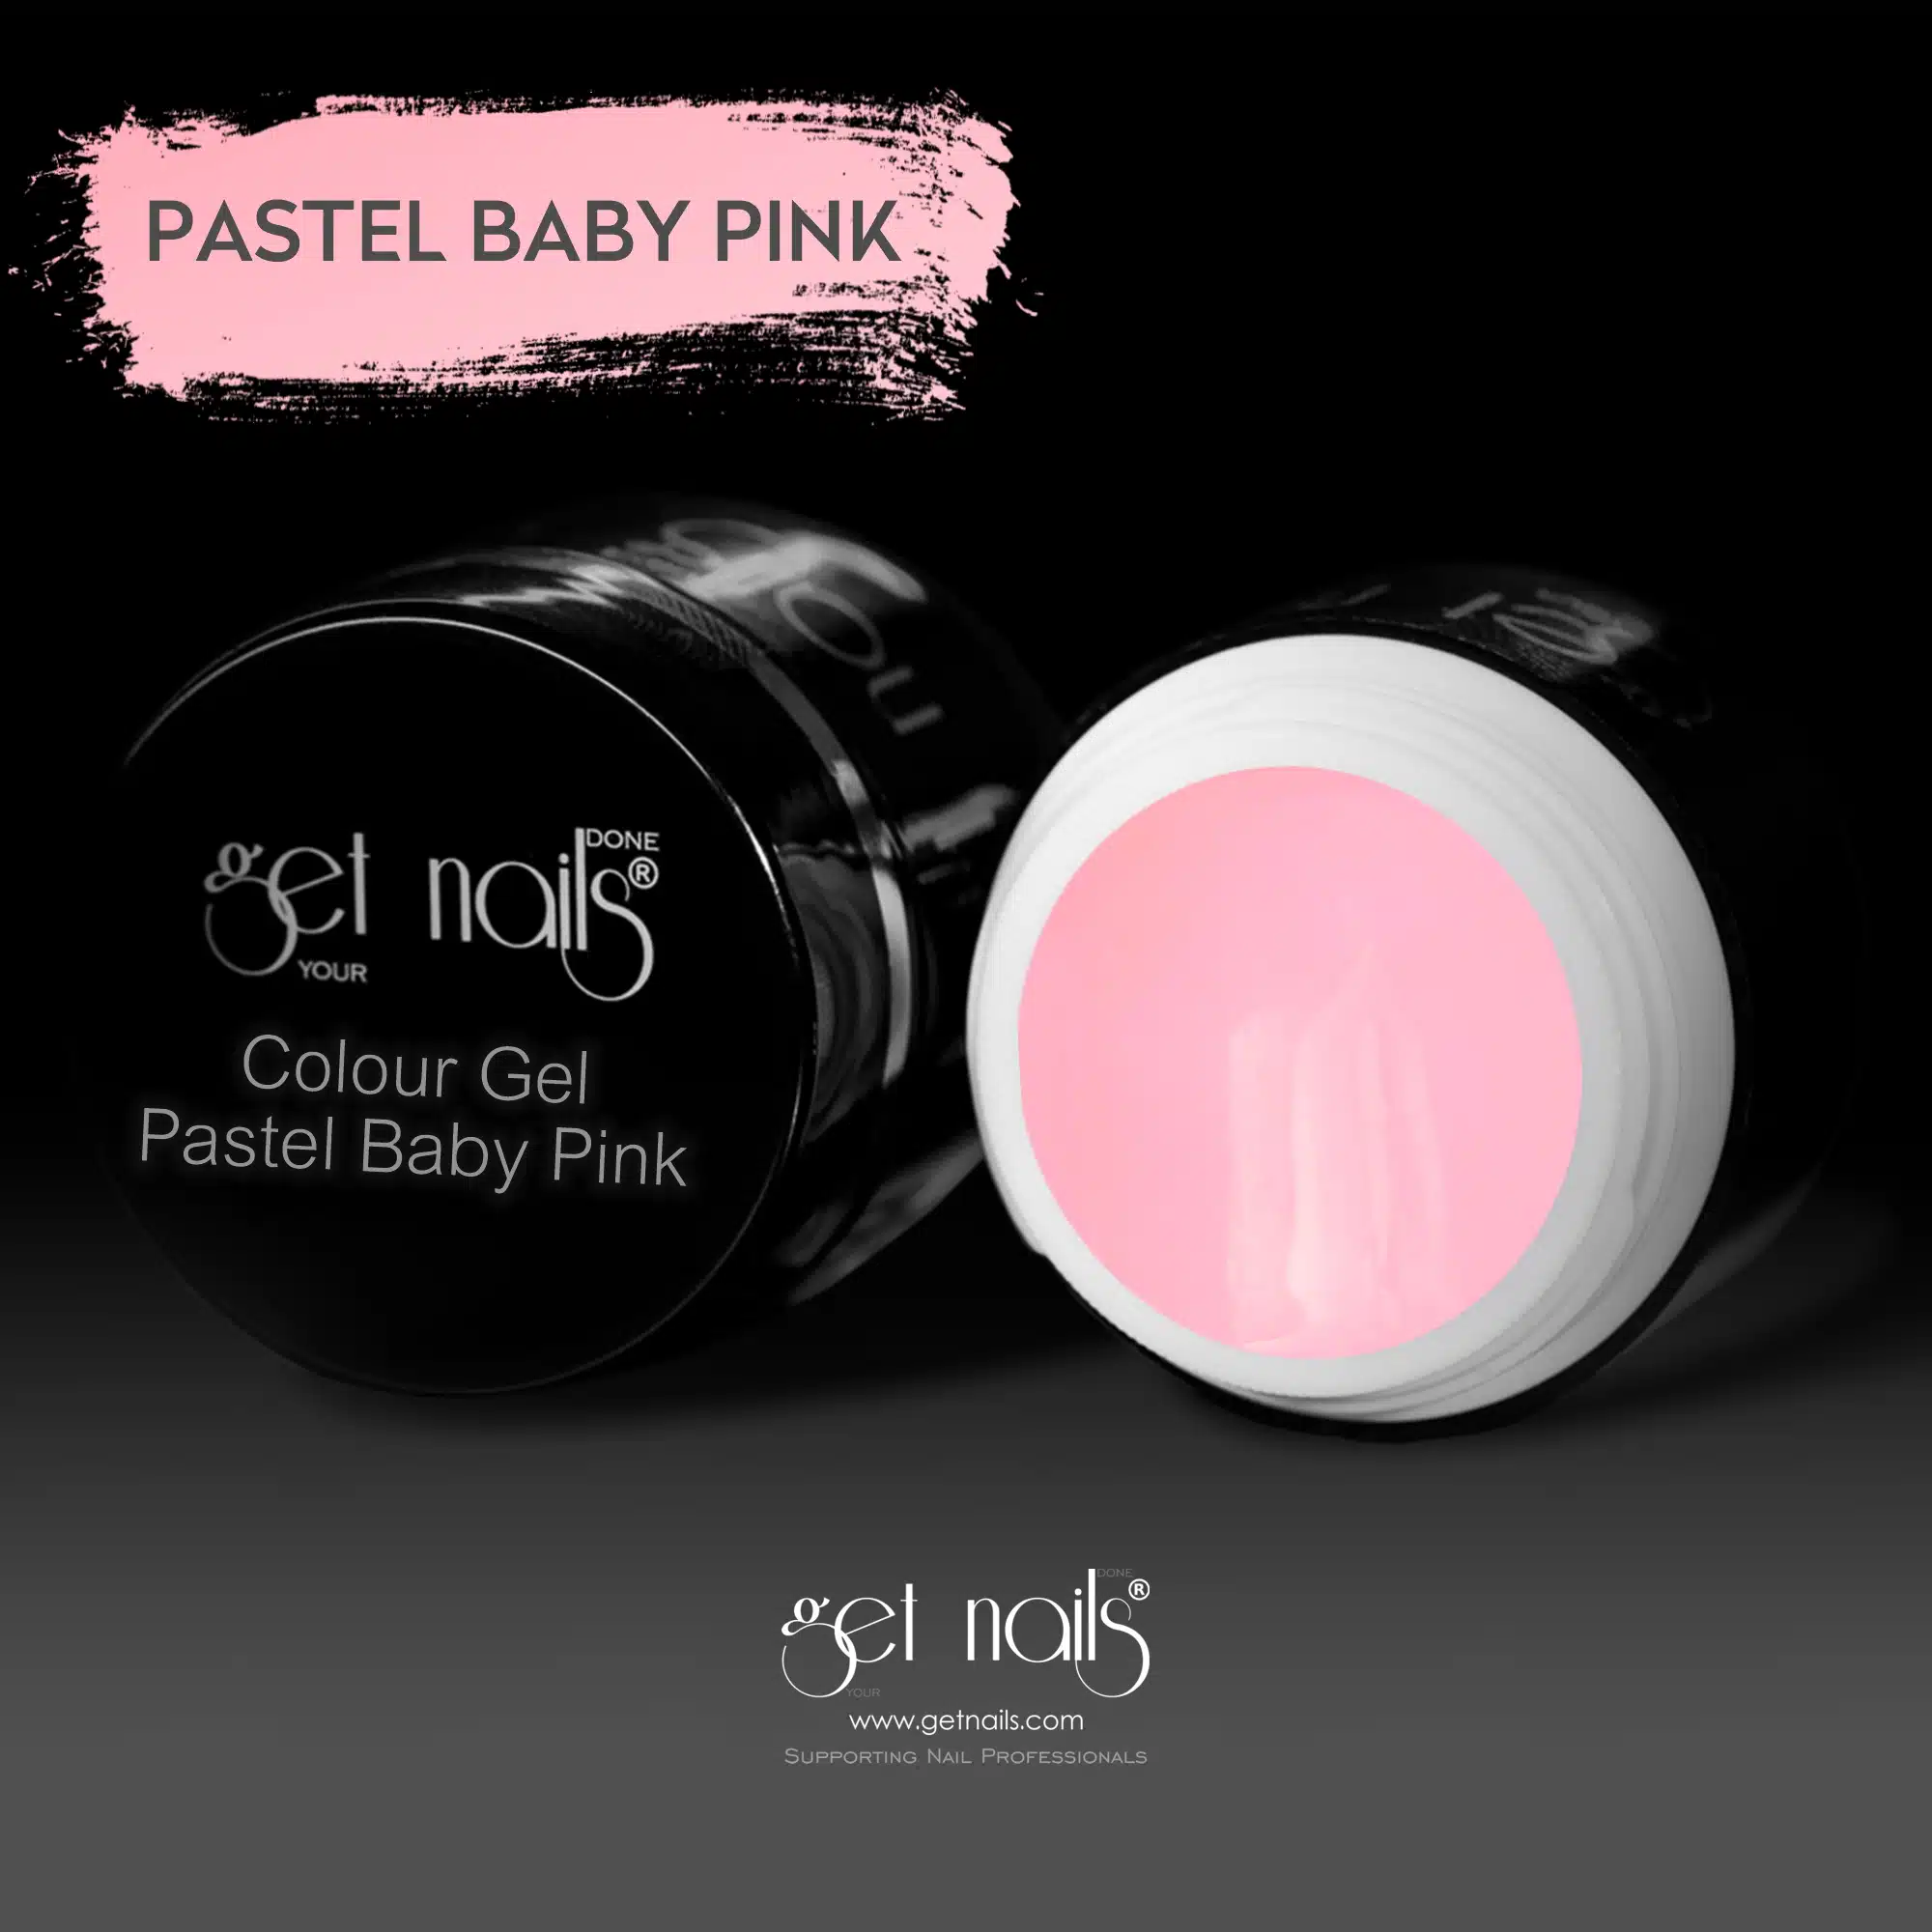 Get Nails Austria - Colour Gel Pastel Baby Pink 5g